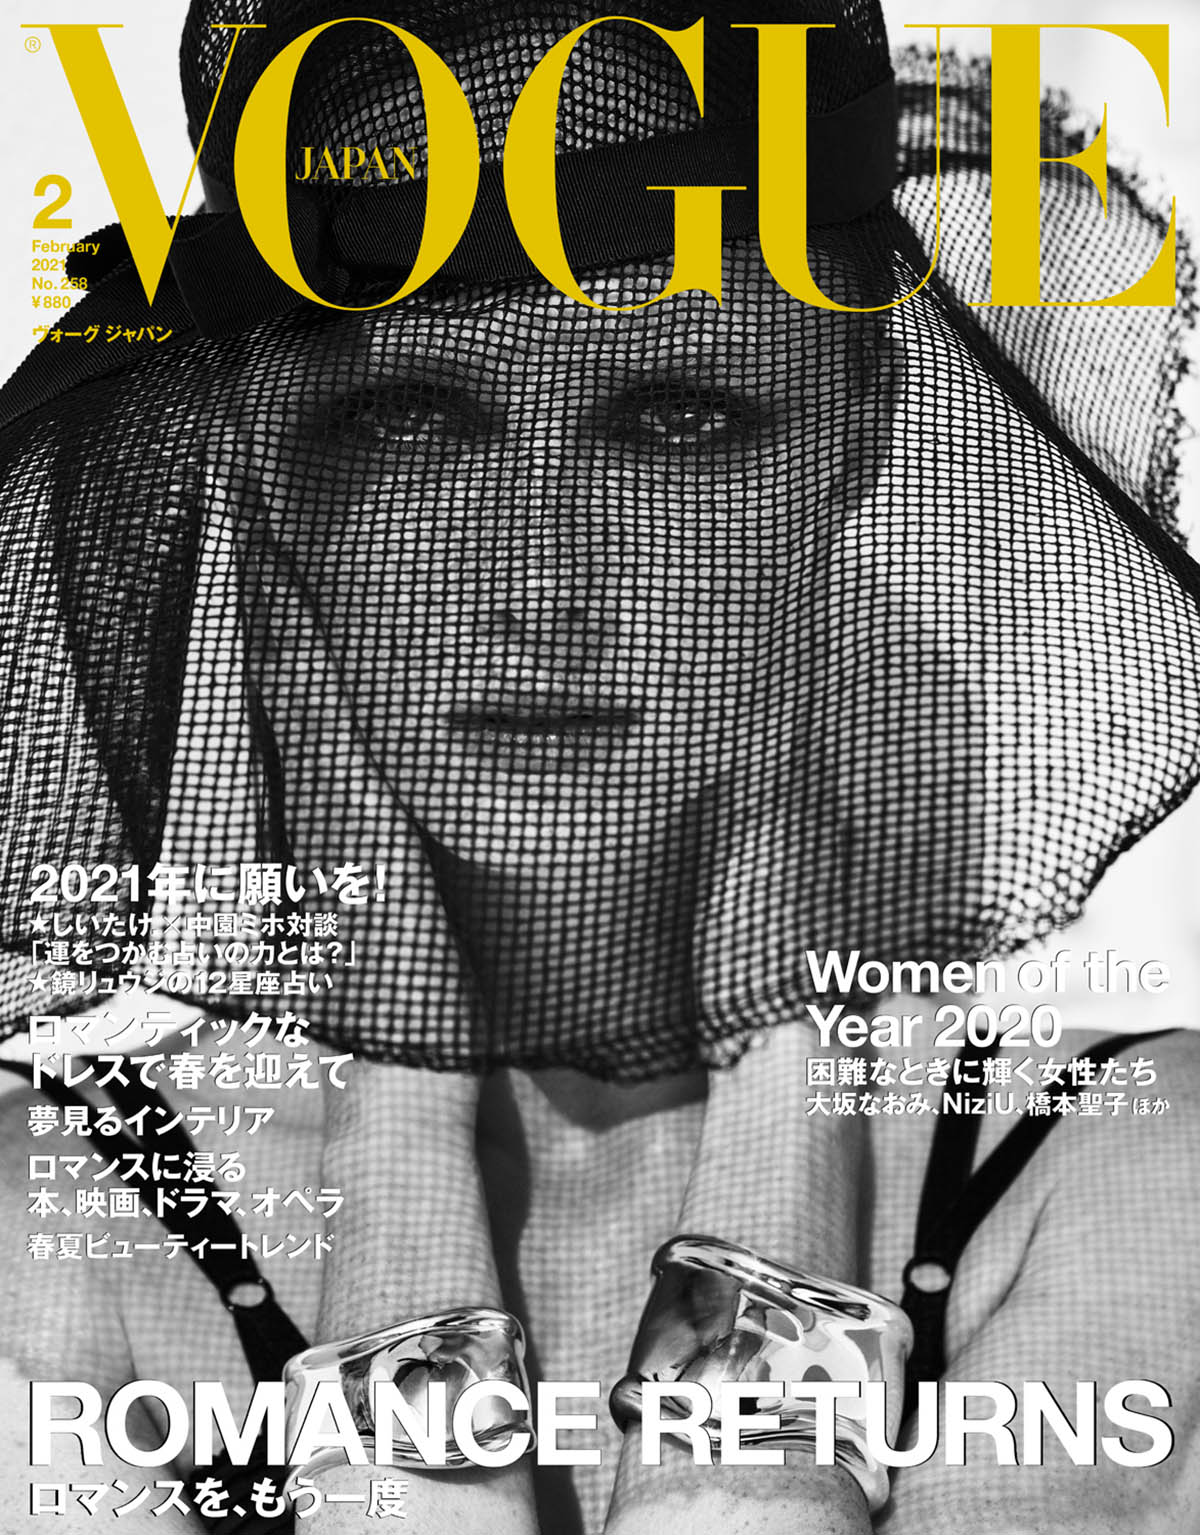 Rianne van Rompaey by Luigi & Iango for Vogue Japan February 2021